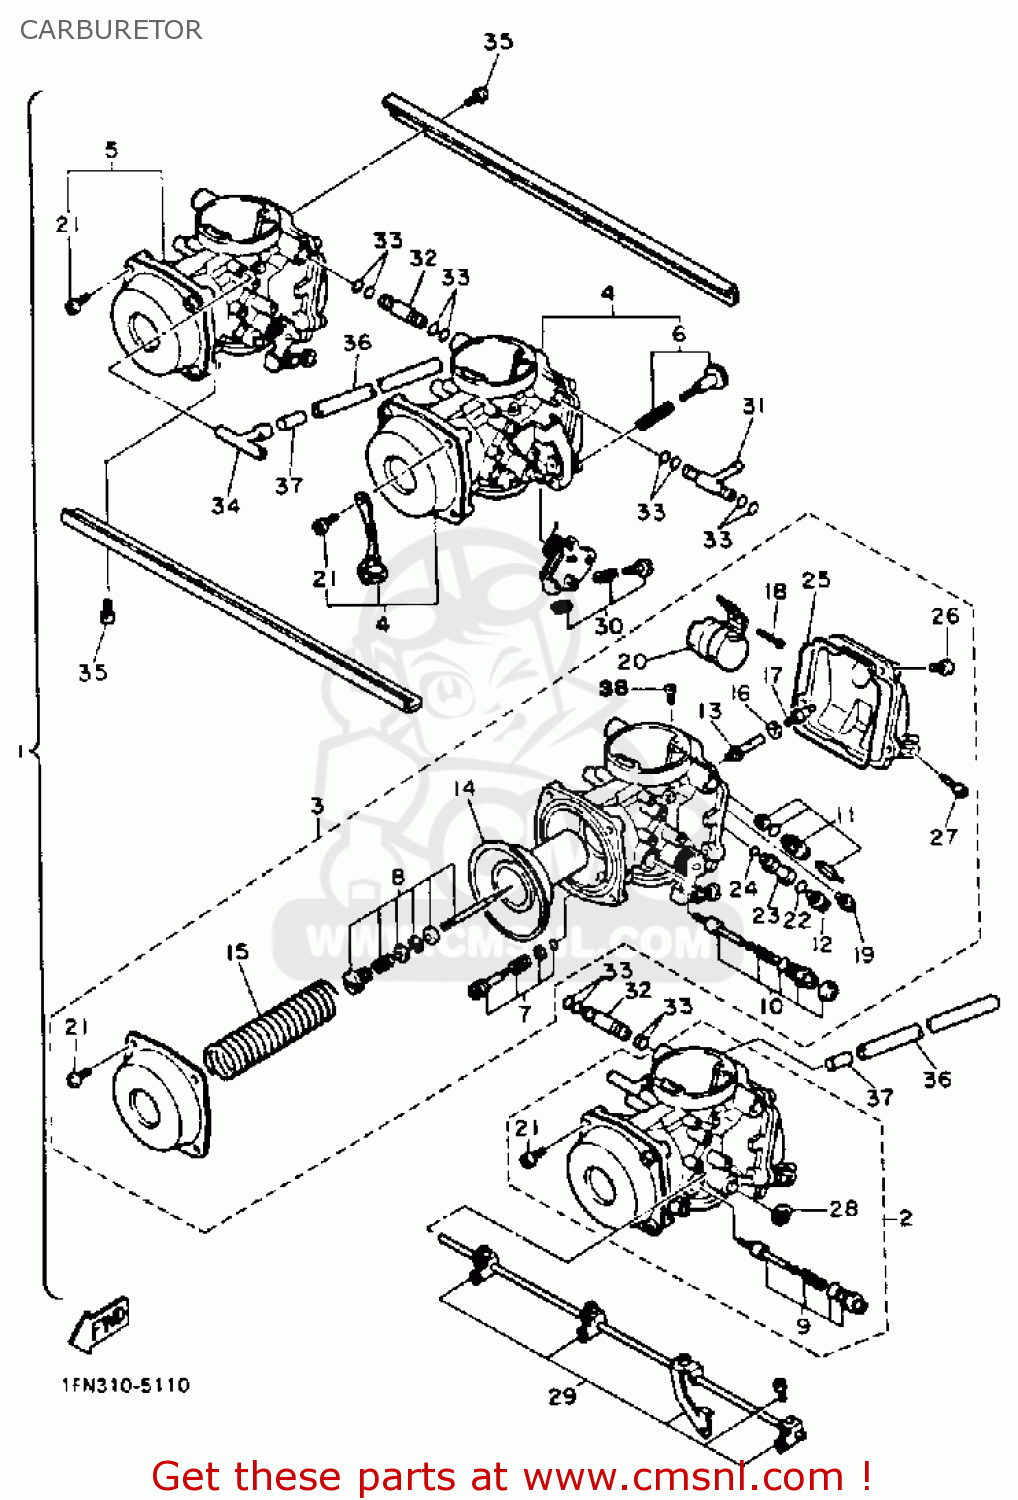 yamaha raptor 90 carburetor diagram